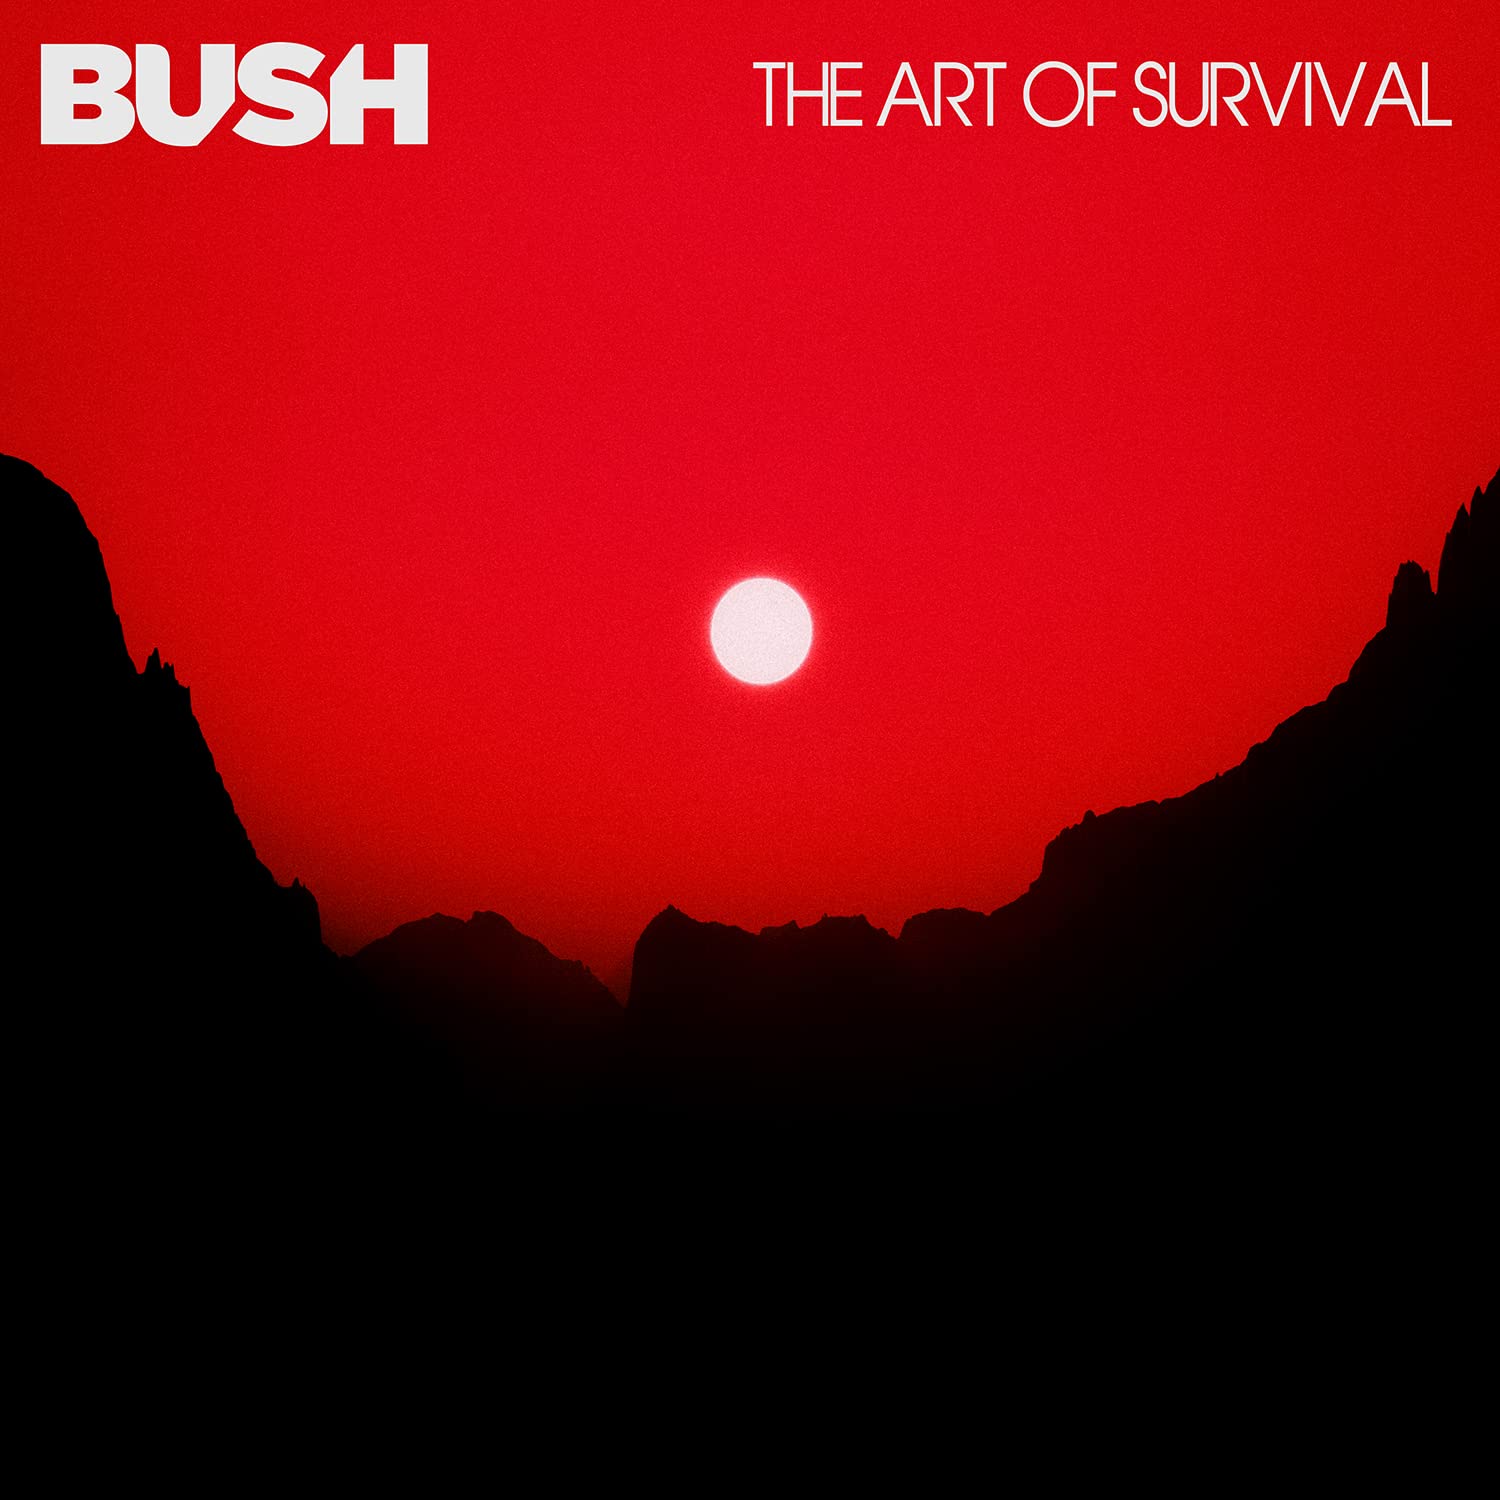 Bush Art of survival